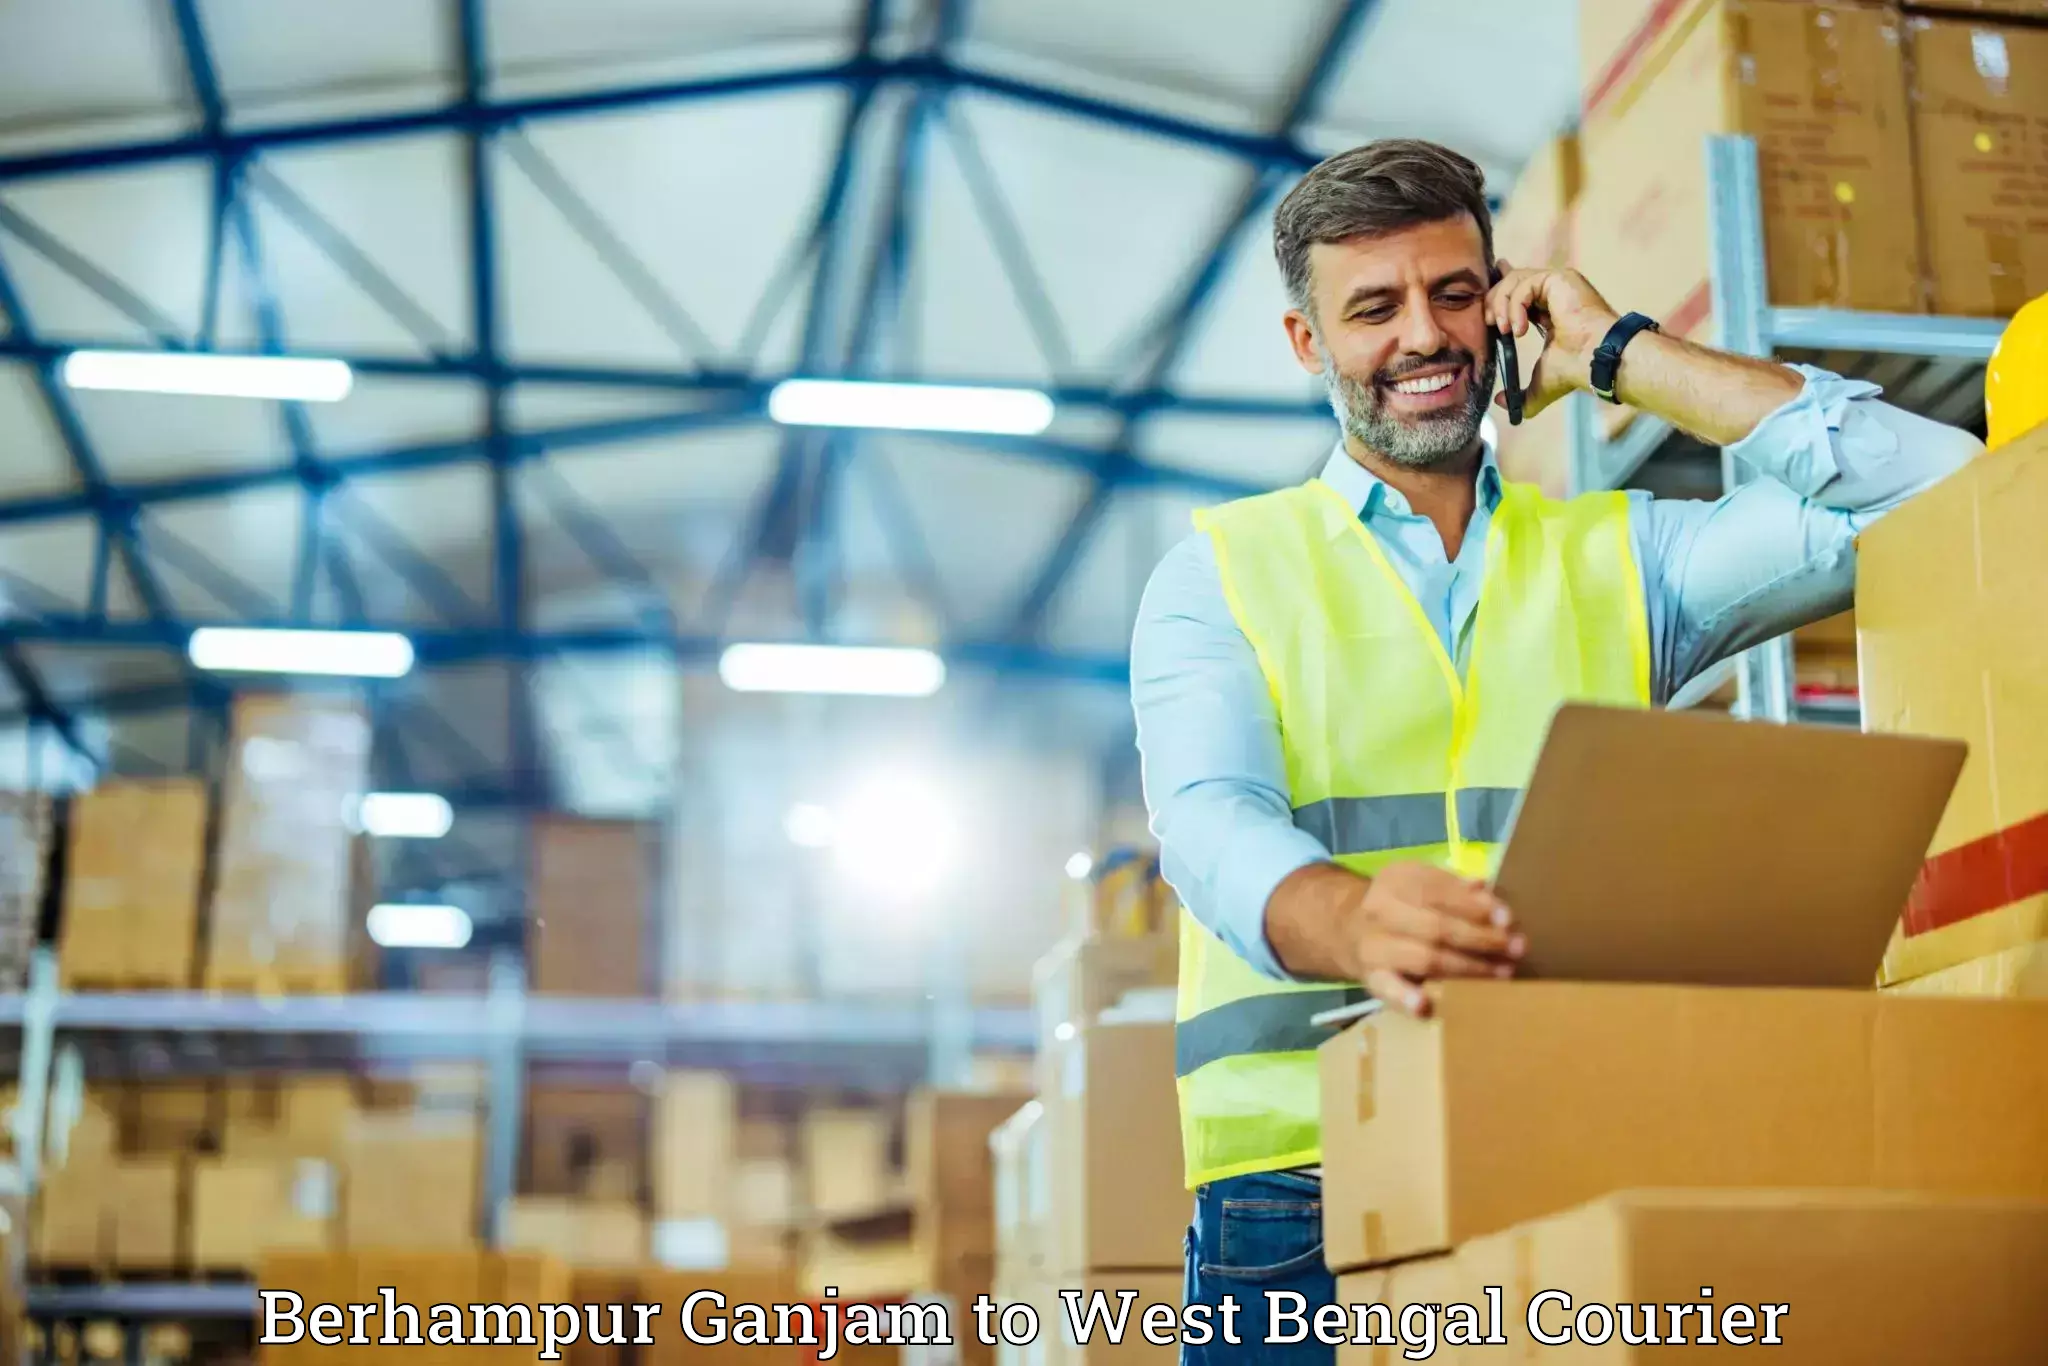 Furniture delivery service Berhampur Ganjam to Birbhum